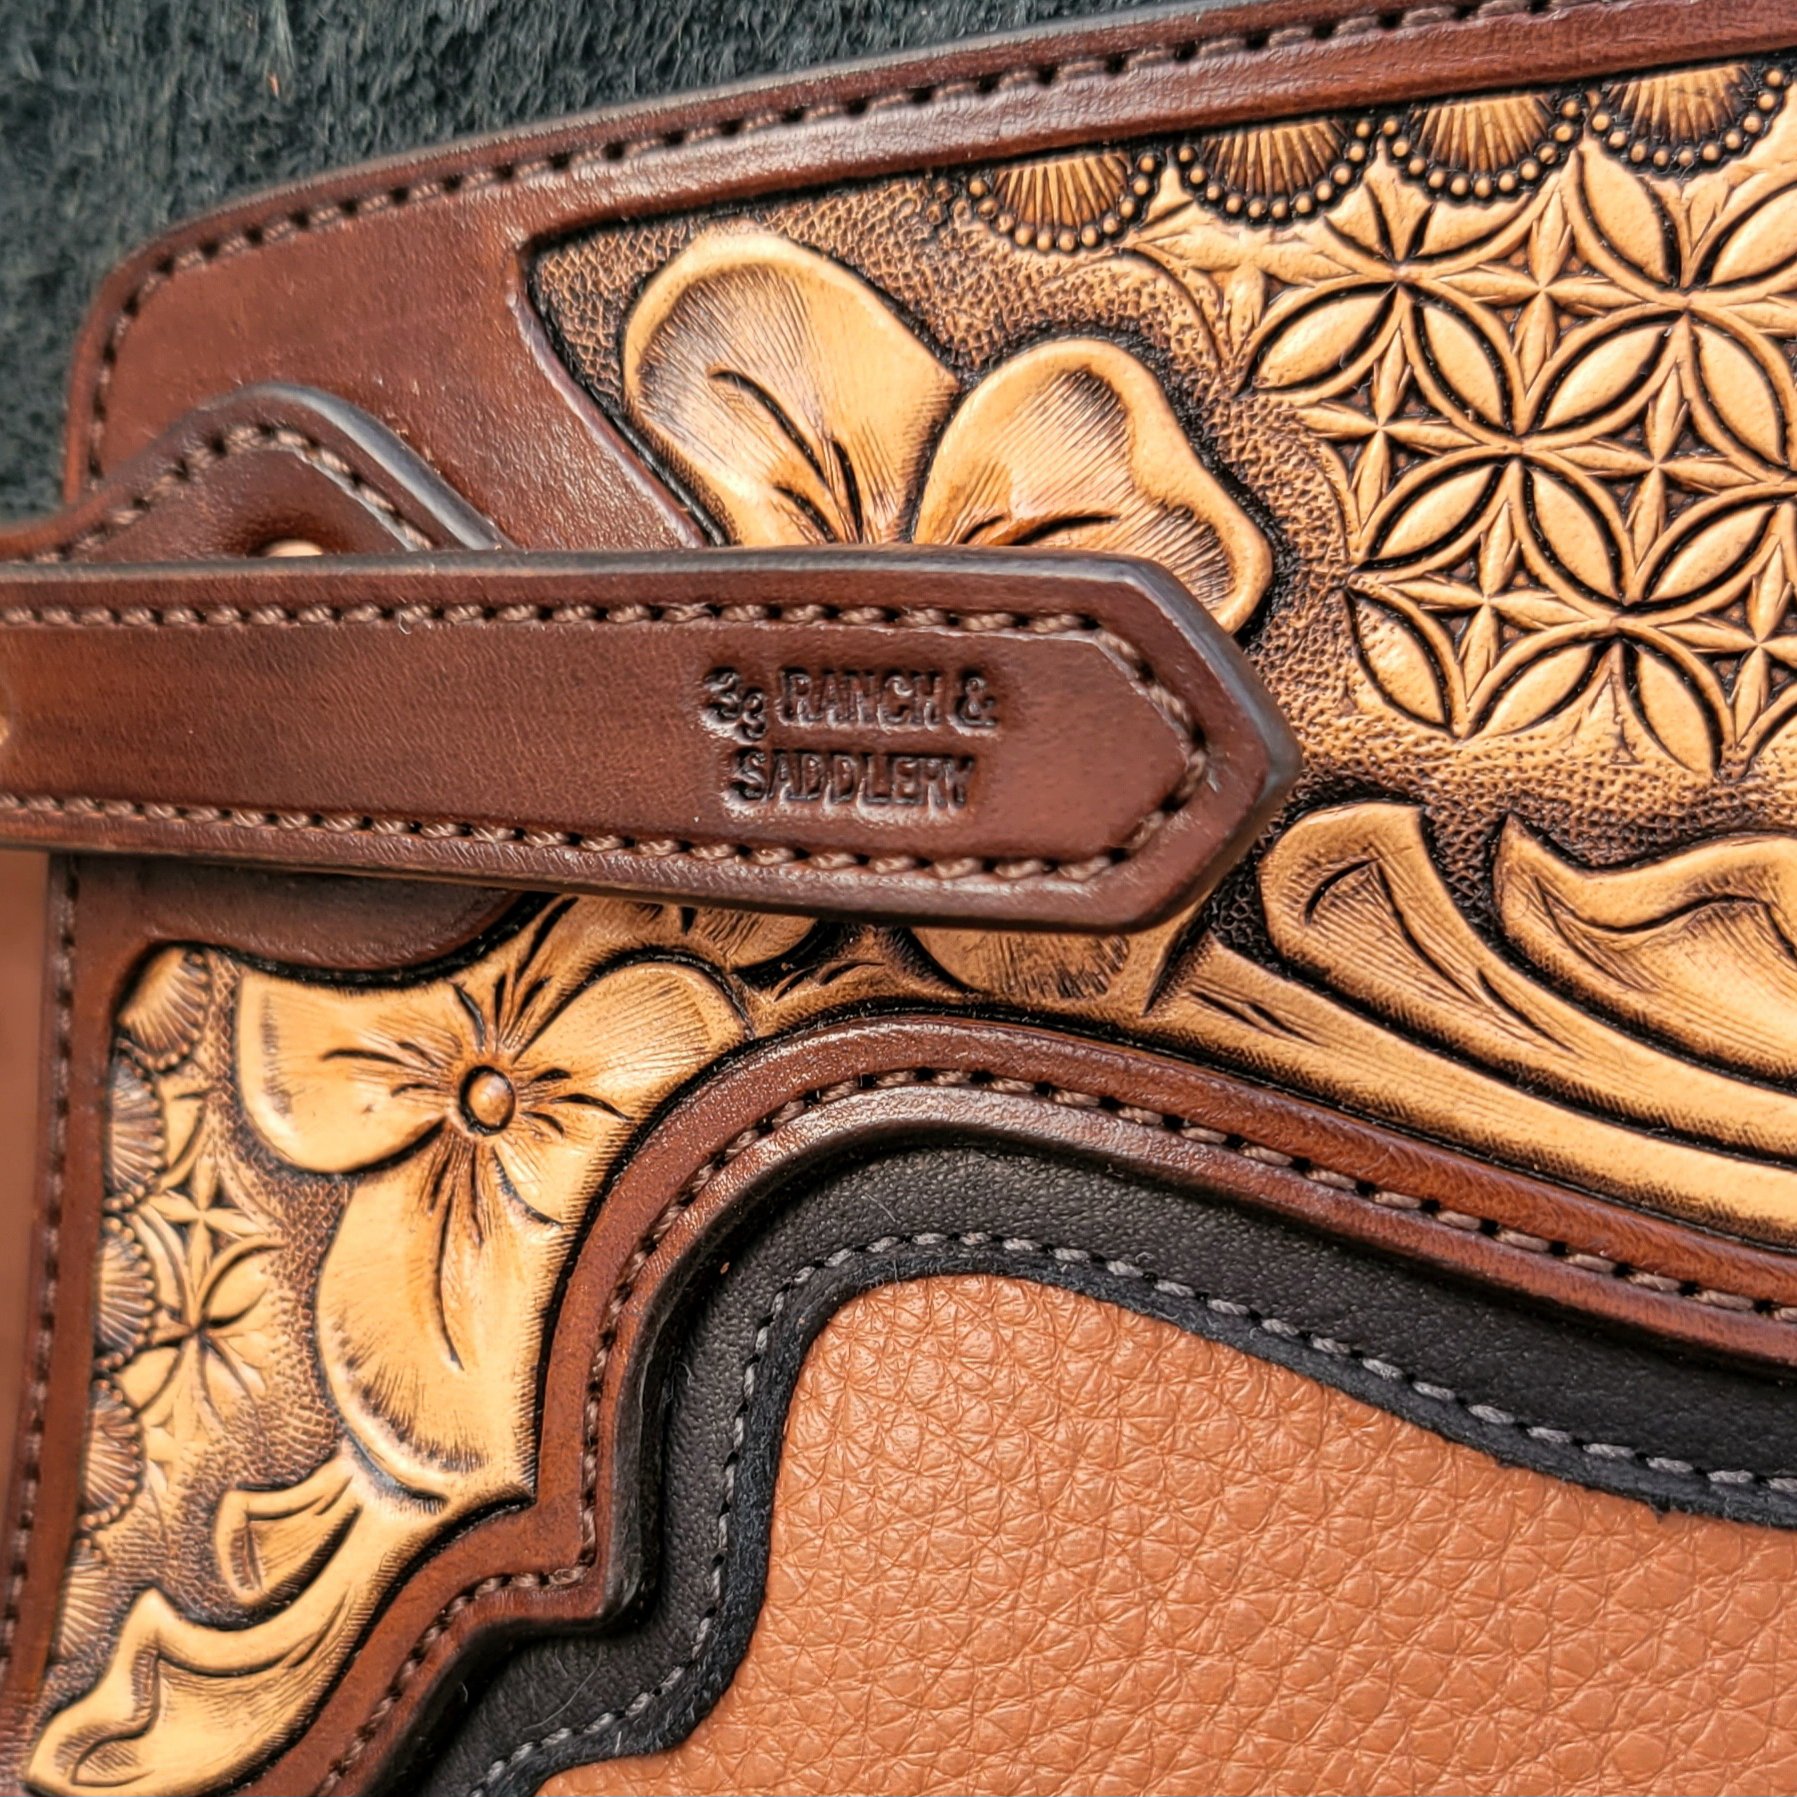 Hydrangea Custom Chinks - front belt